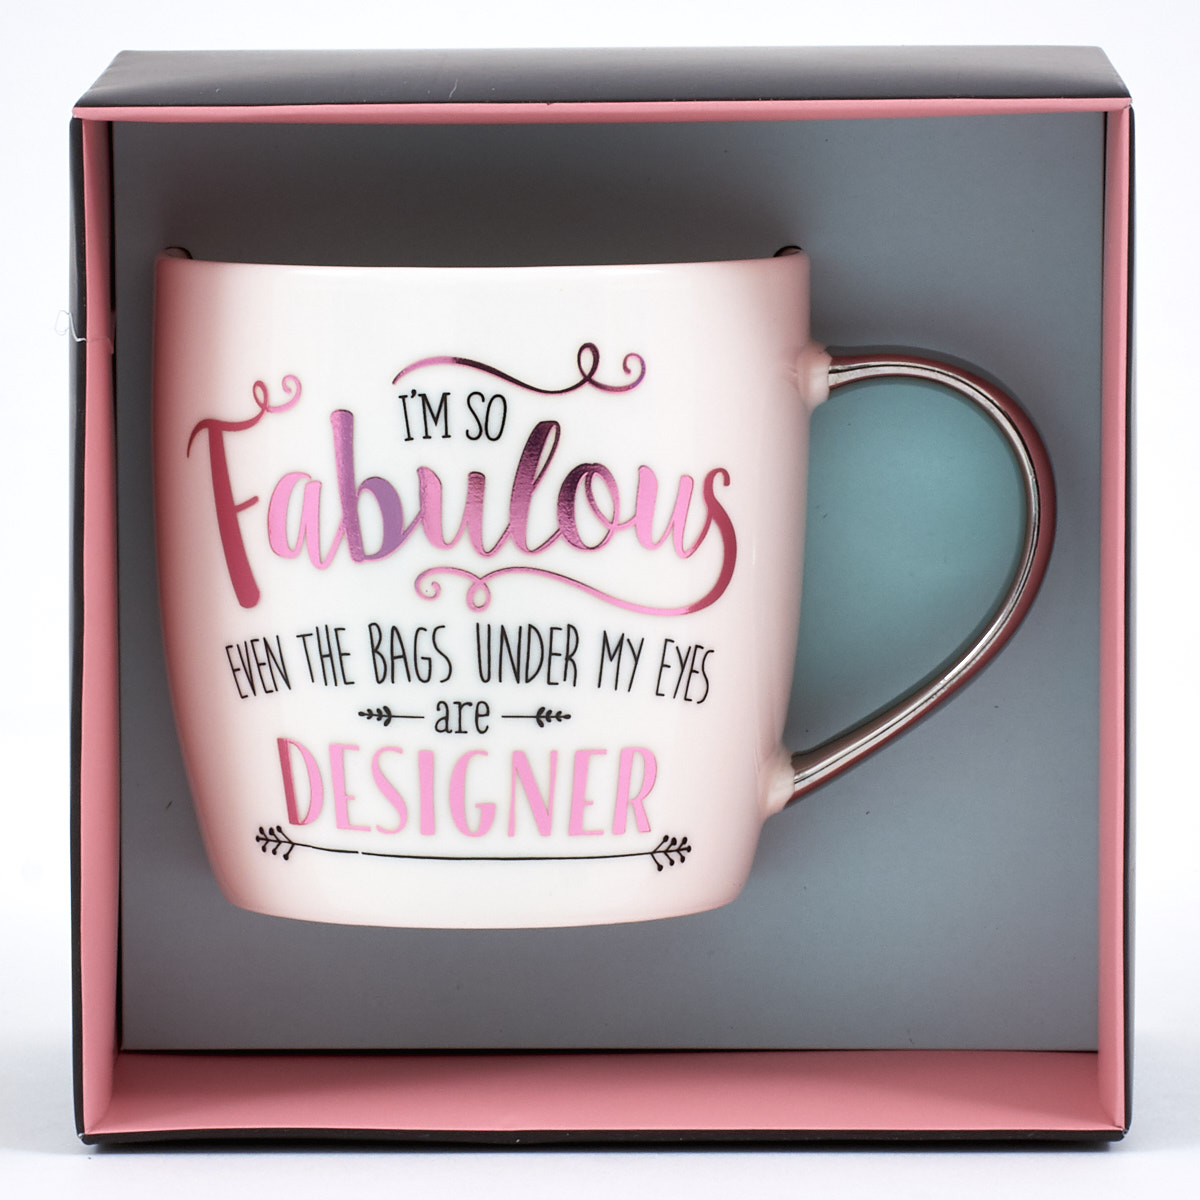 “I’m So Fabulous Even The Bags Under My Eyes Are Designer” Mug